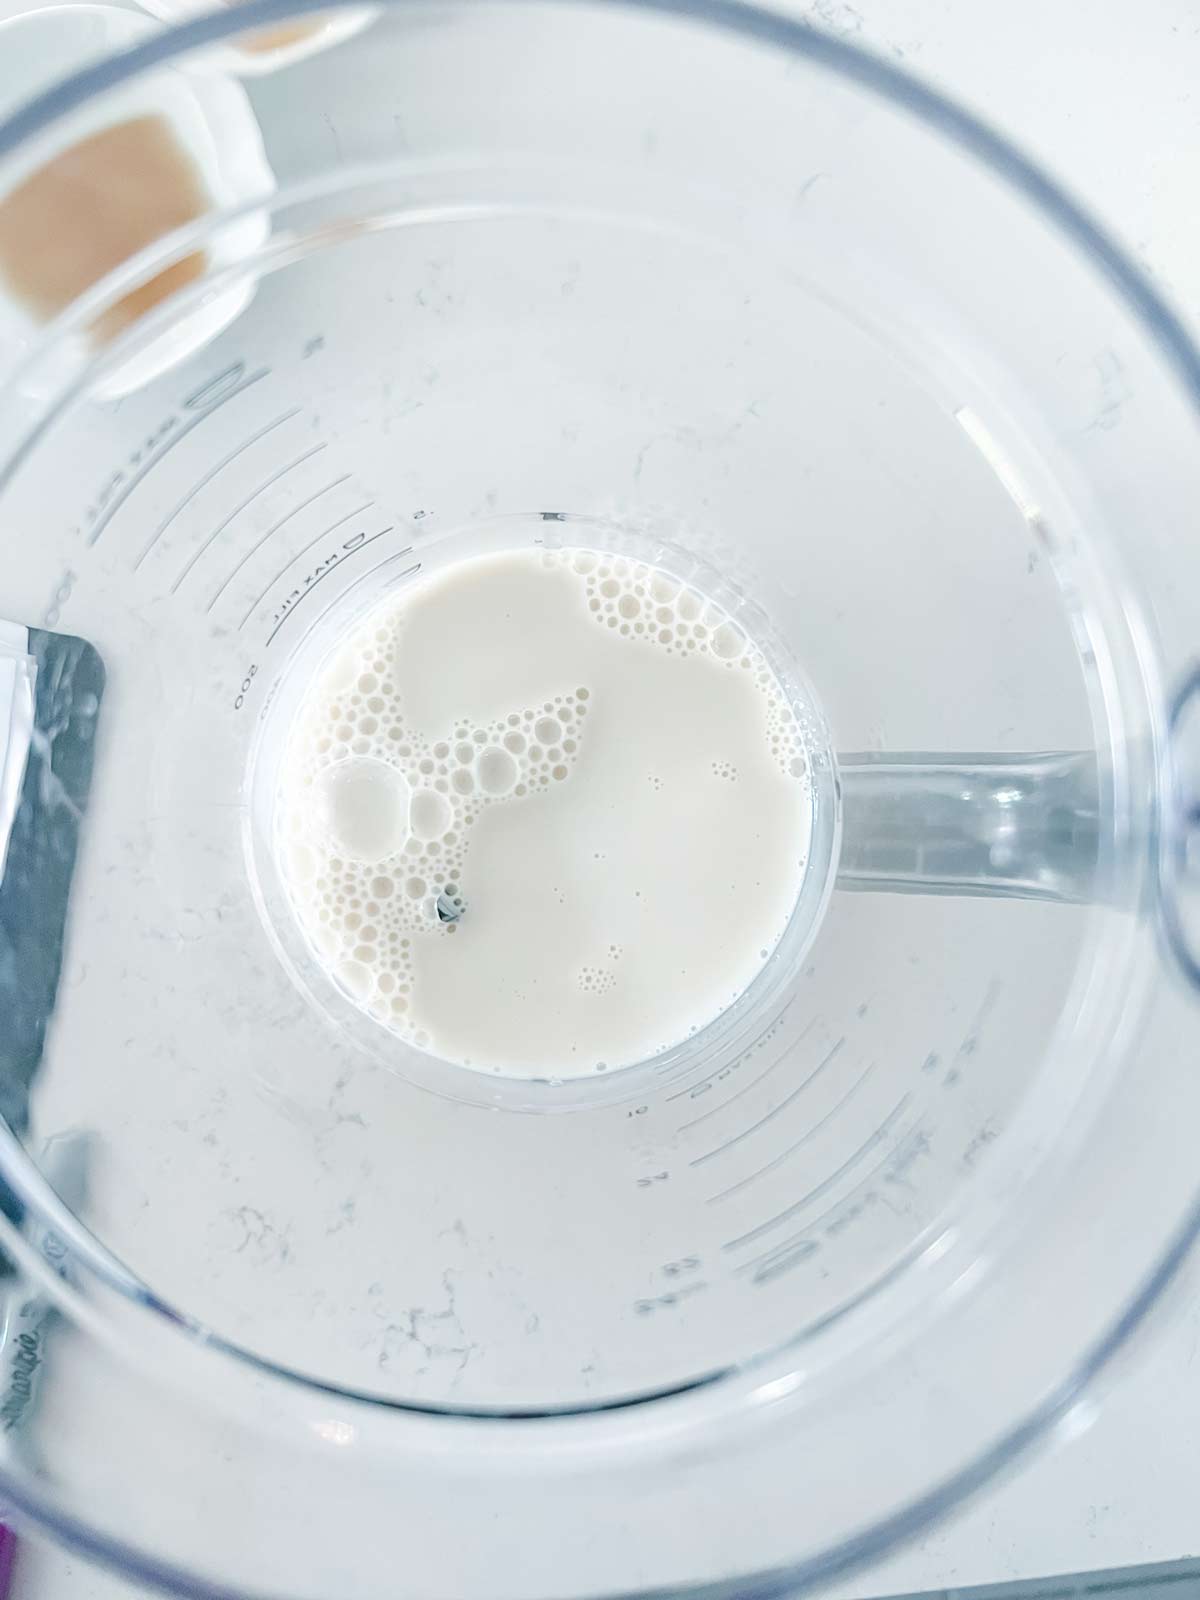 Milk in a blender.